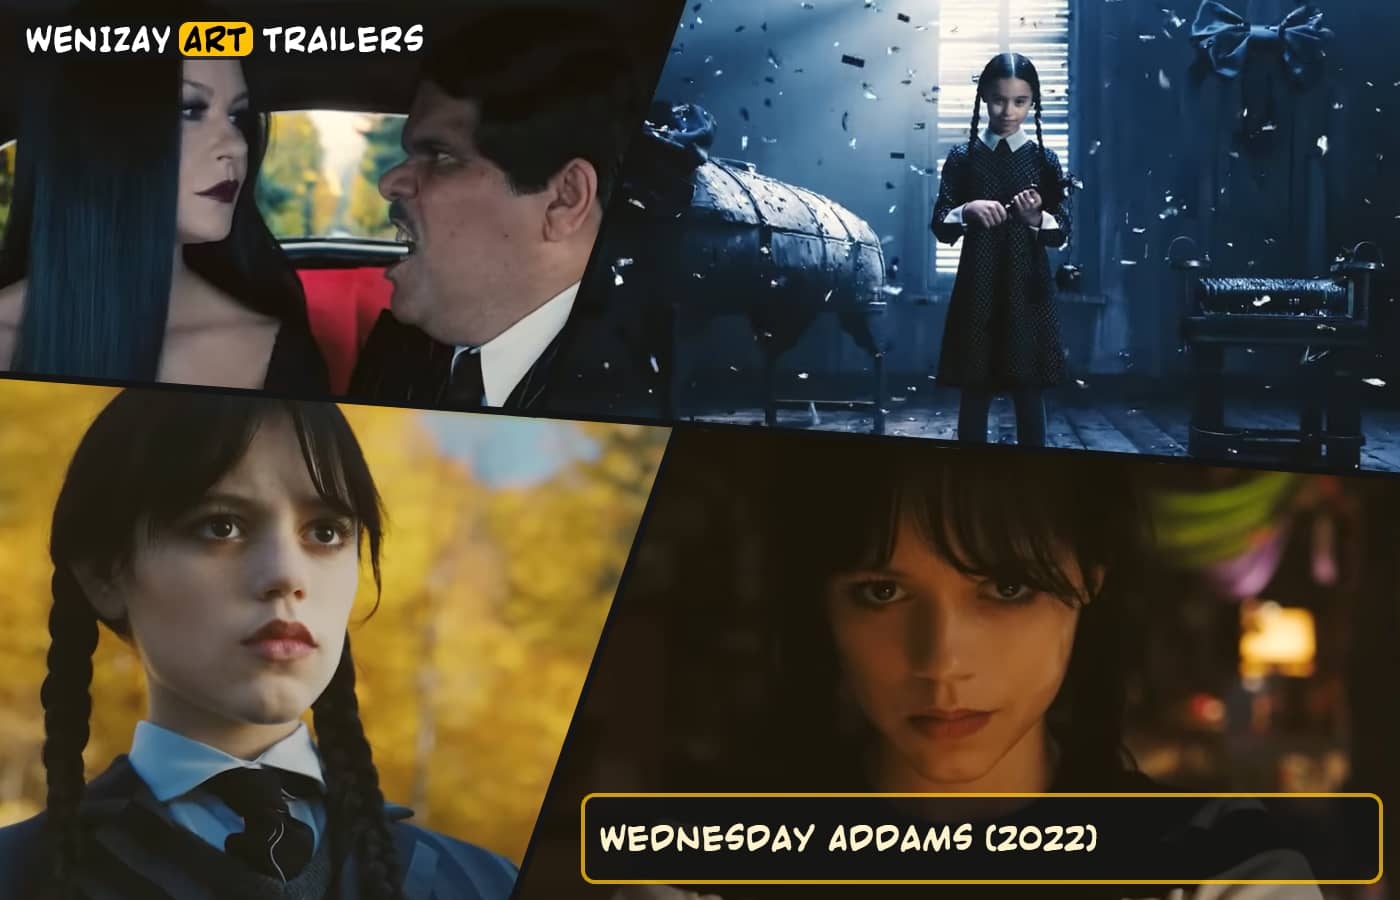 Wednesday Addams (TV series) - watch trailer, WeniZAYArt Trailers